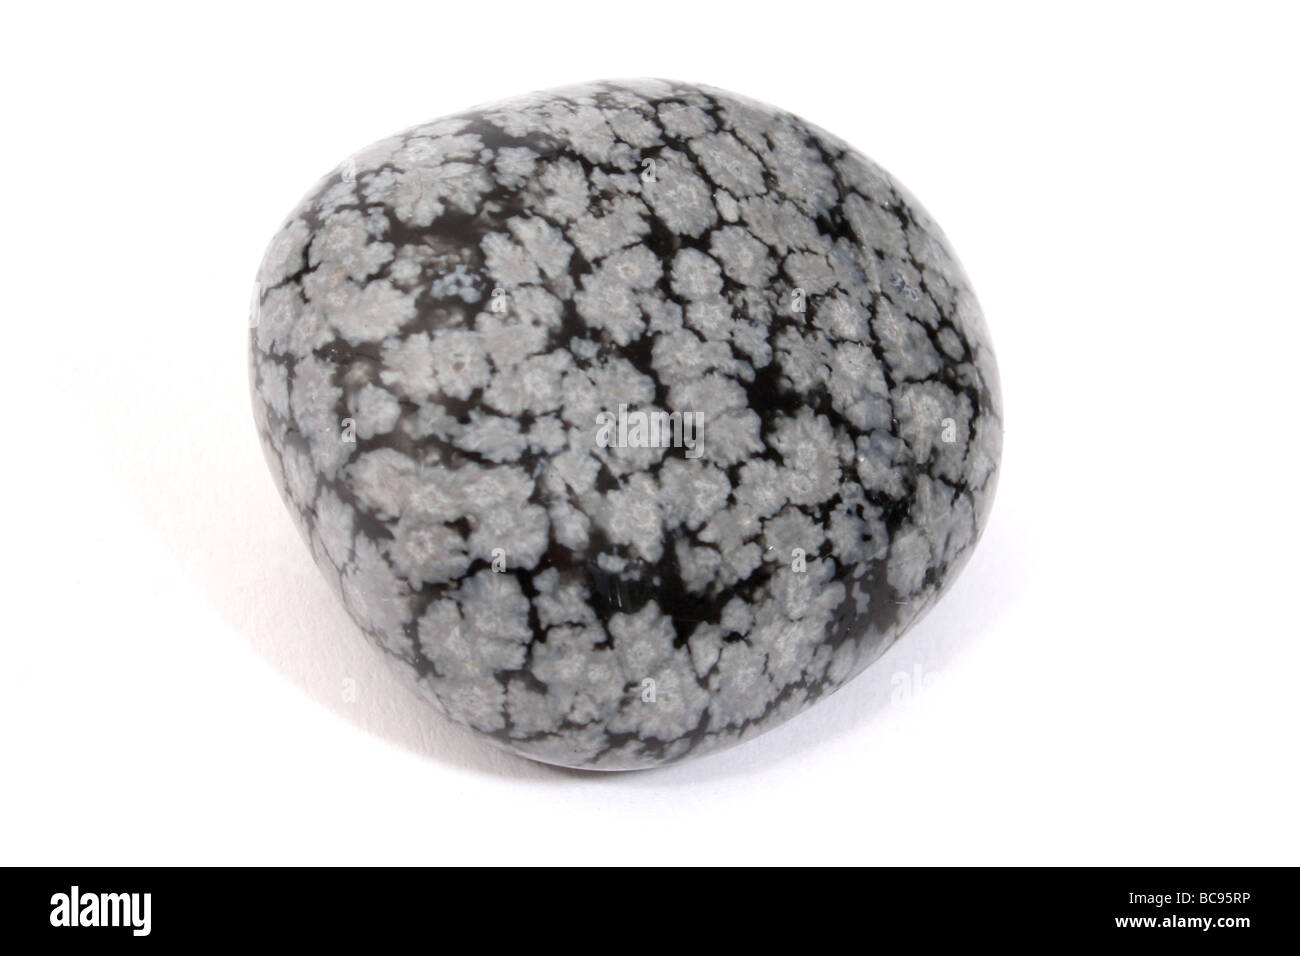 A Snowflake Obsidian healing crystal. Stock Photo